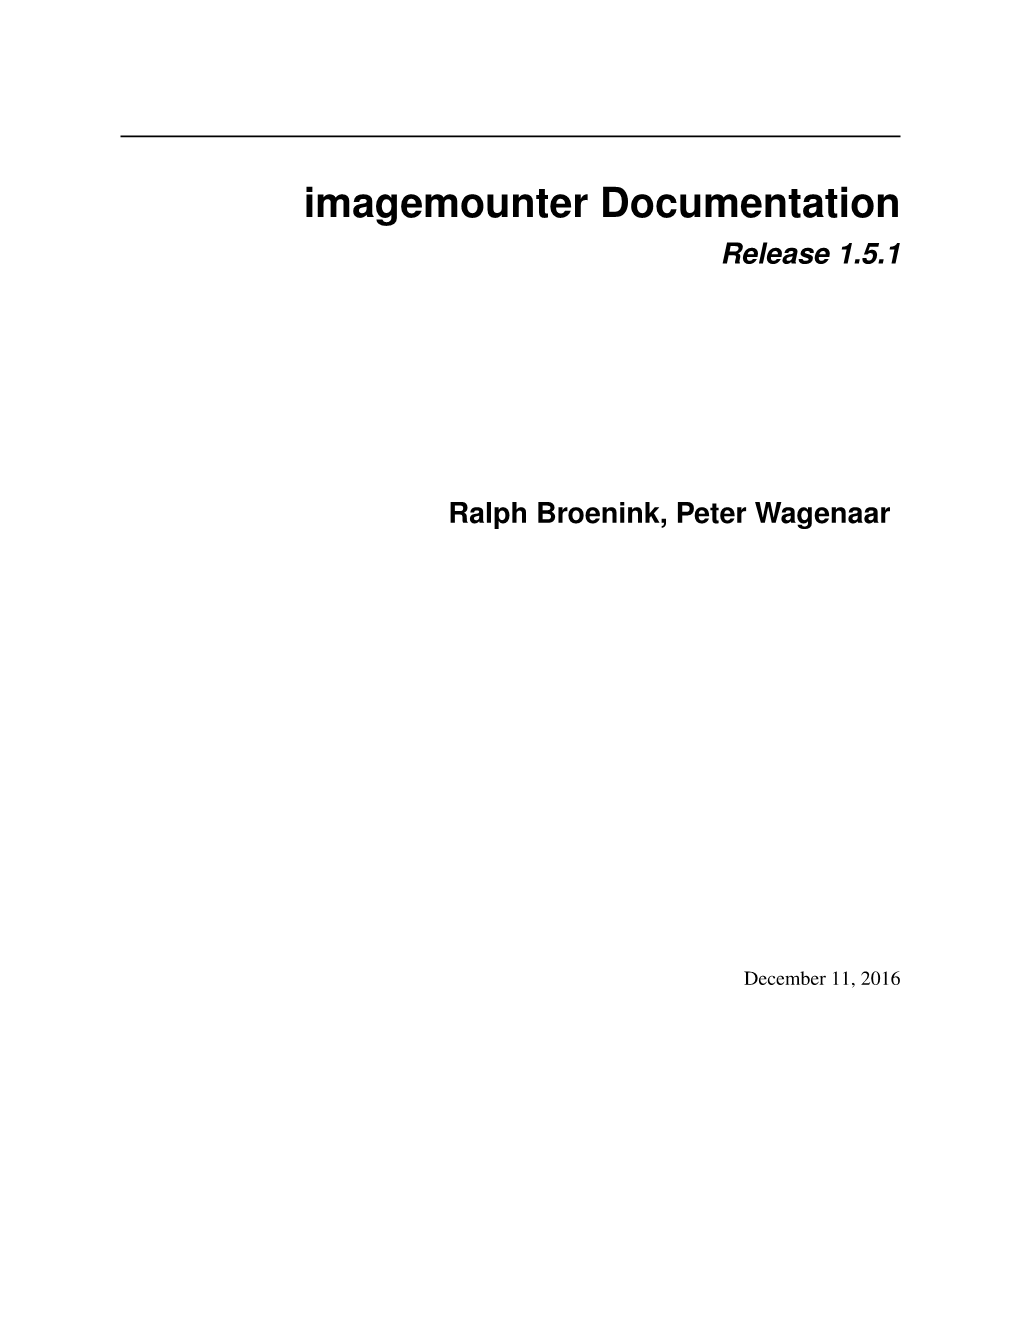 Imagemounter Documentation Release 1.5.1